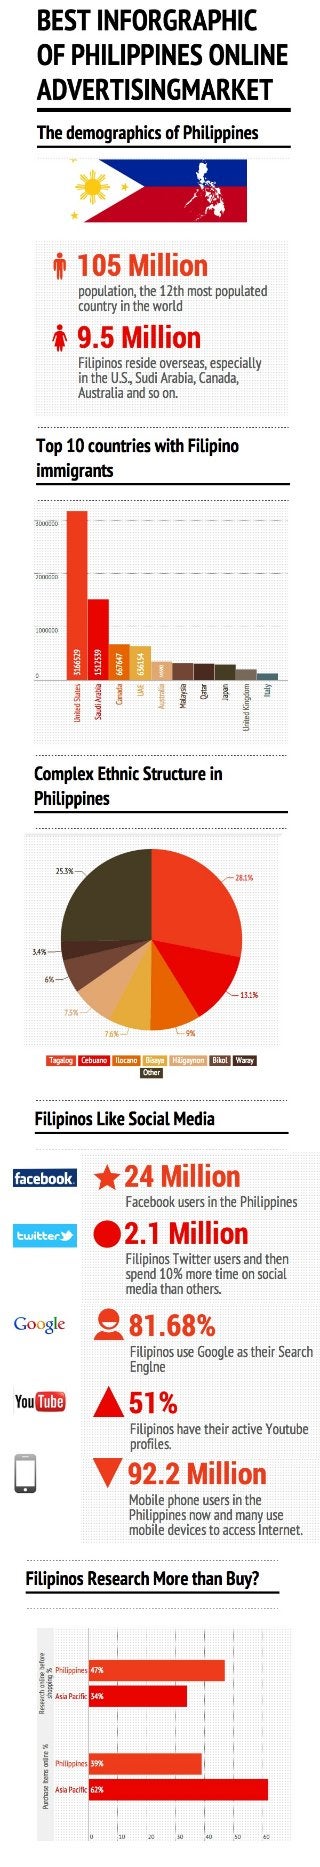 Best Infographic of Philippines online advertising market